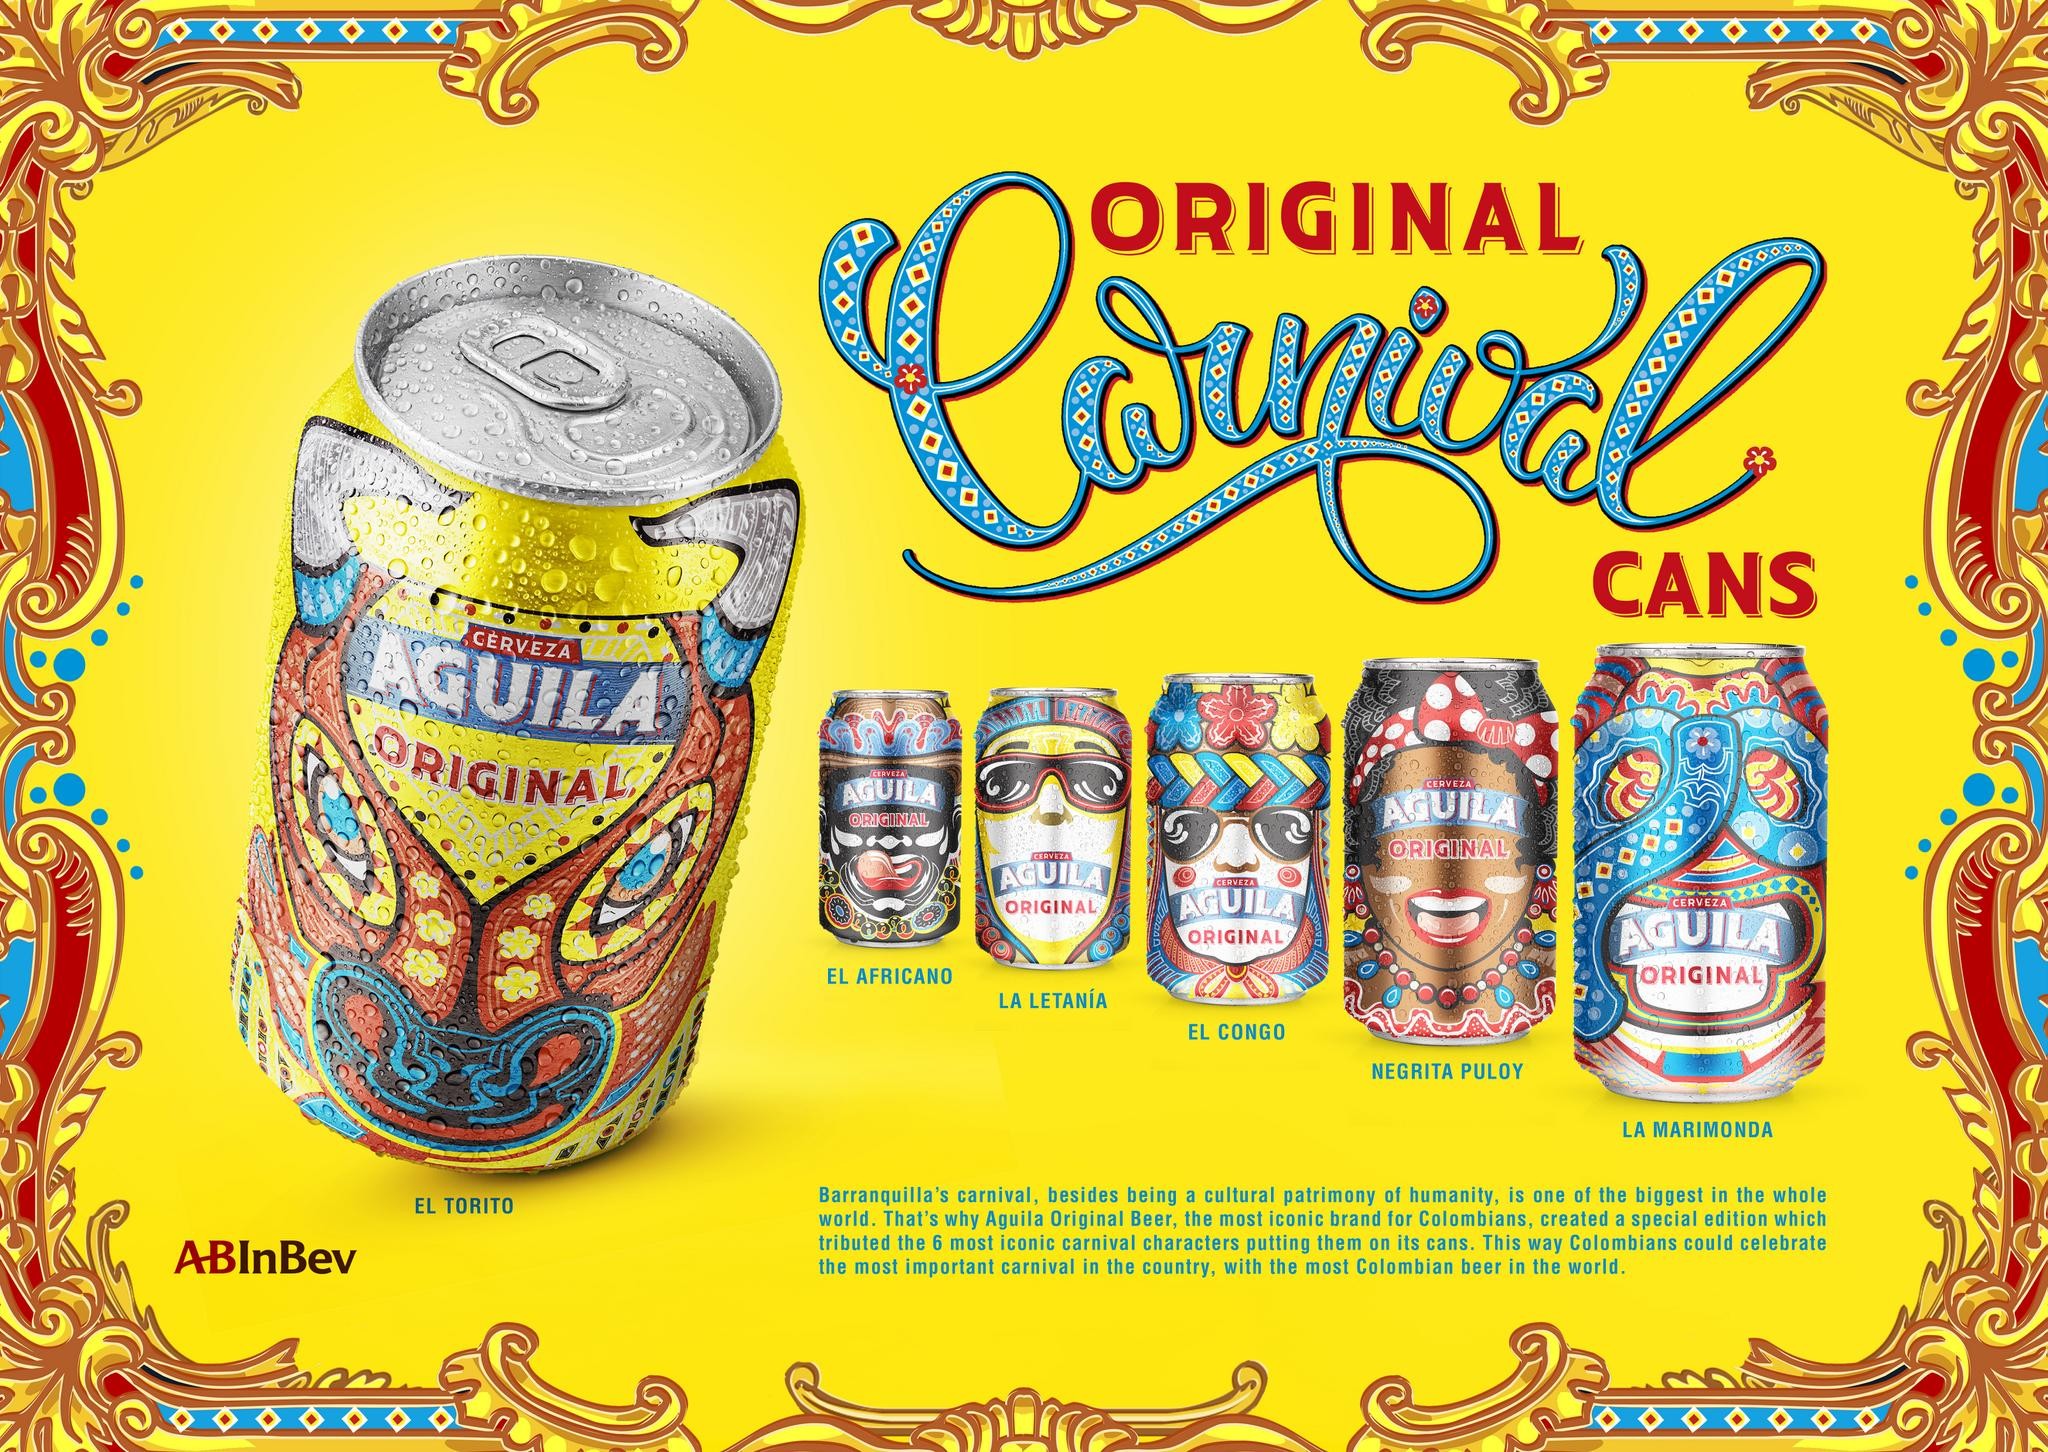 ORIGINAL CARNIVAL CANS